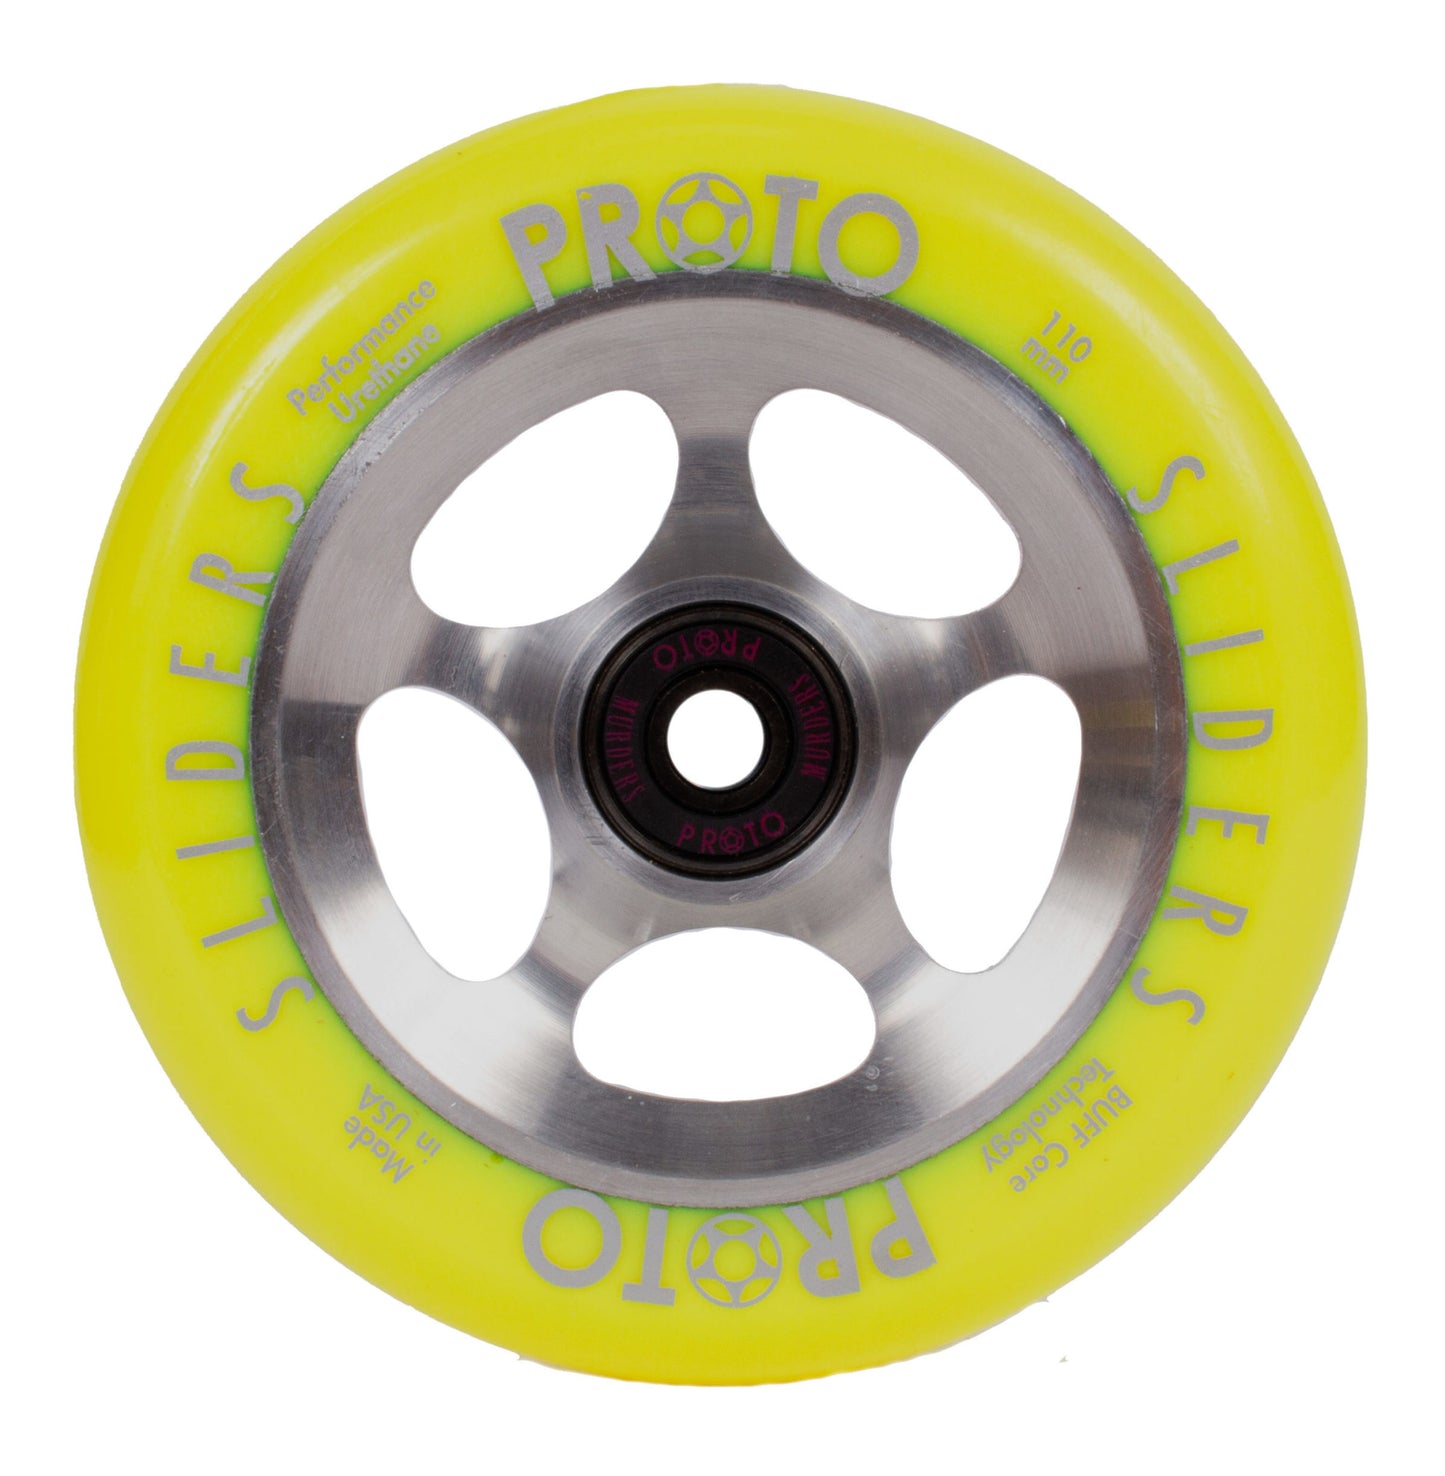 PROTO – StarBright Sliders 110mm (Neon Yellow on RAW)